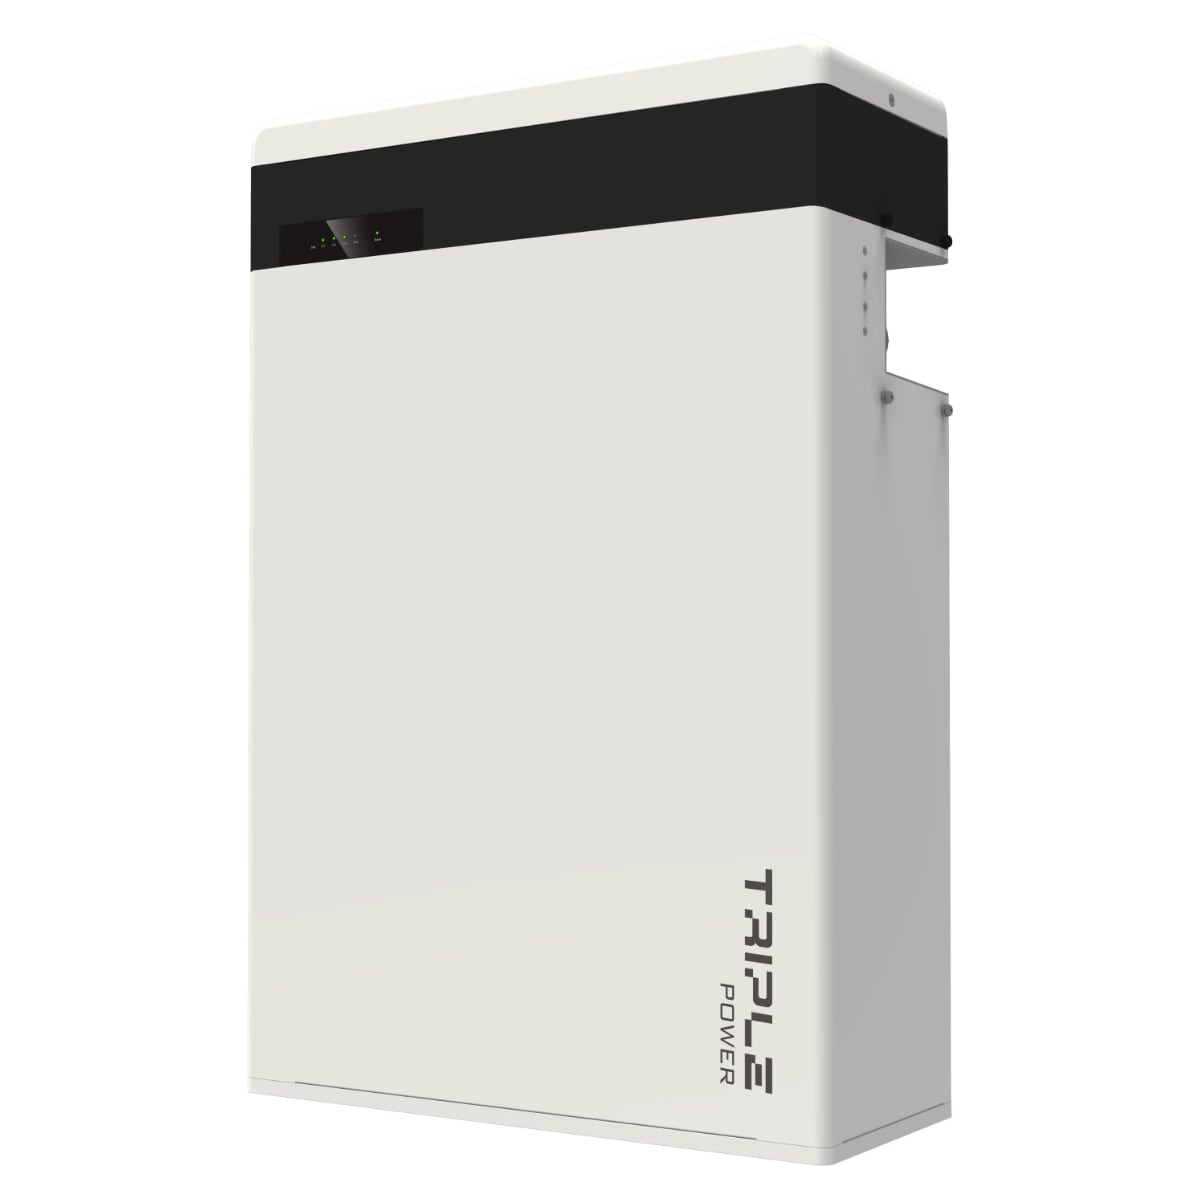 Solax Hybrid Inverter + Battery X3-Hybrid 10.0-D